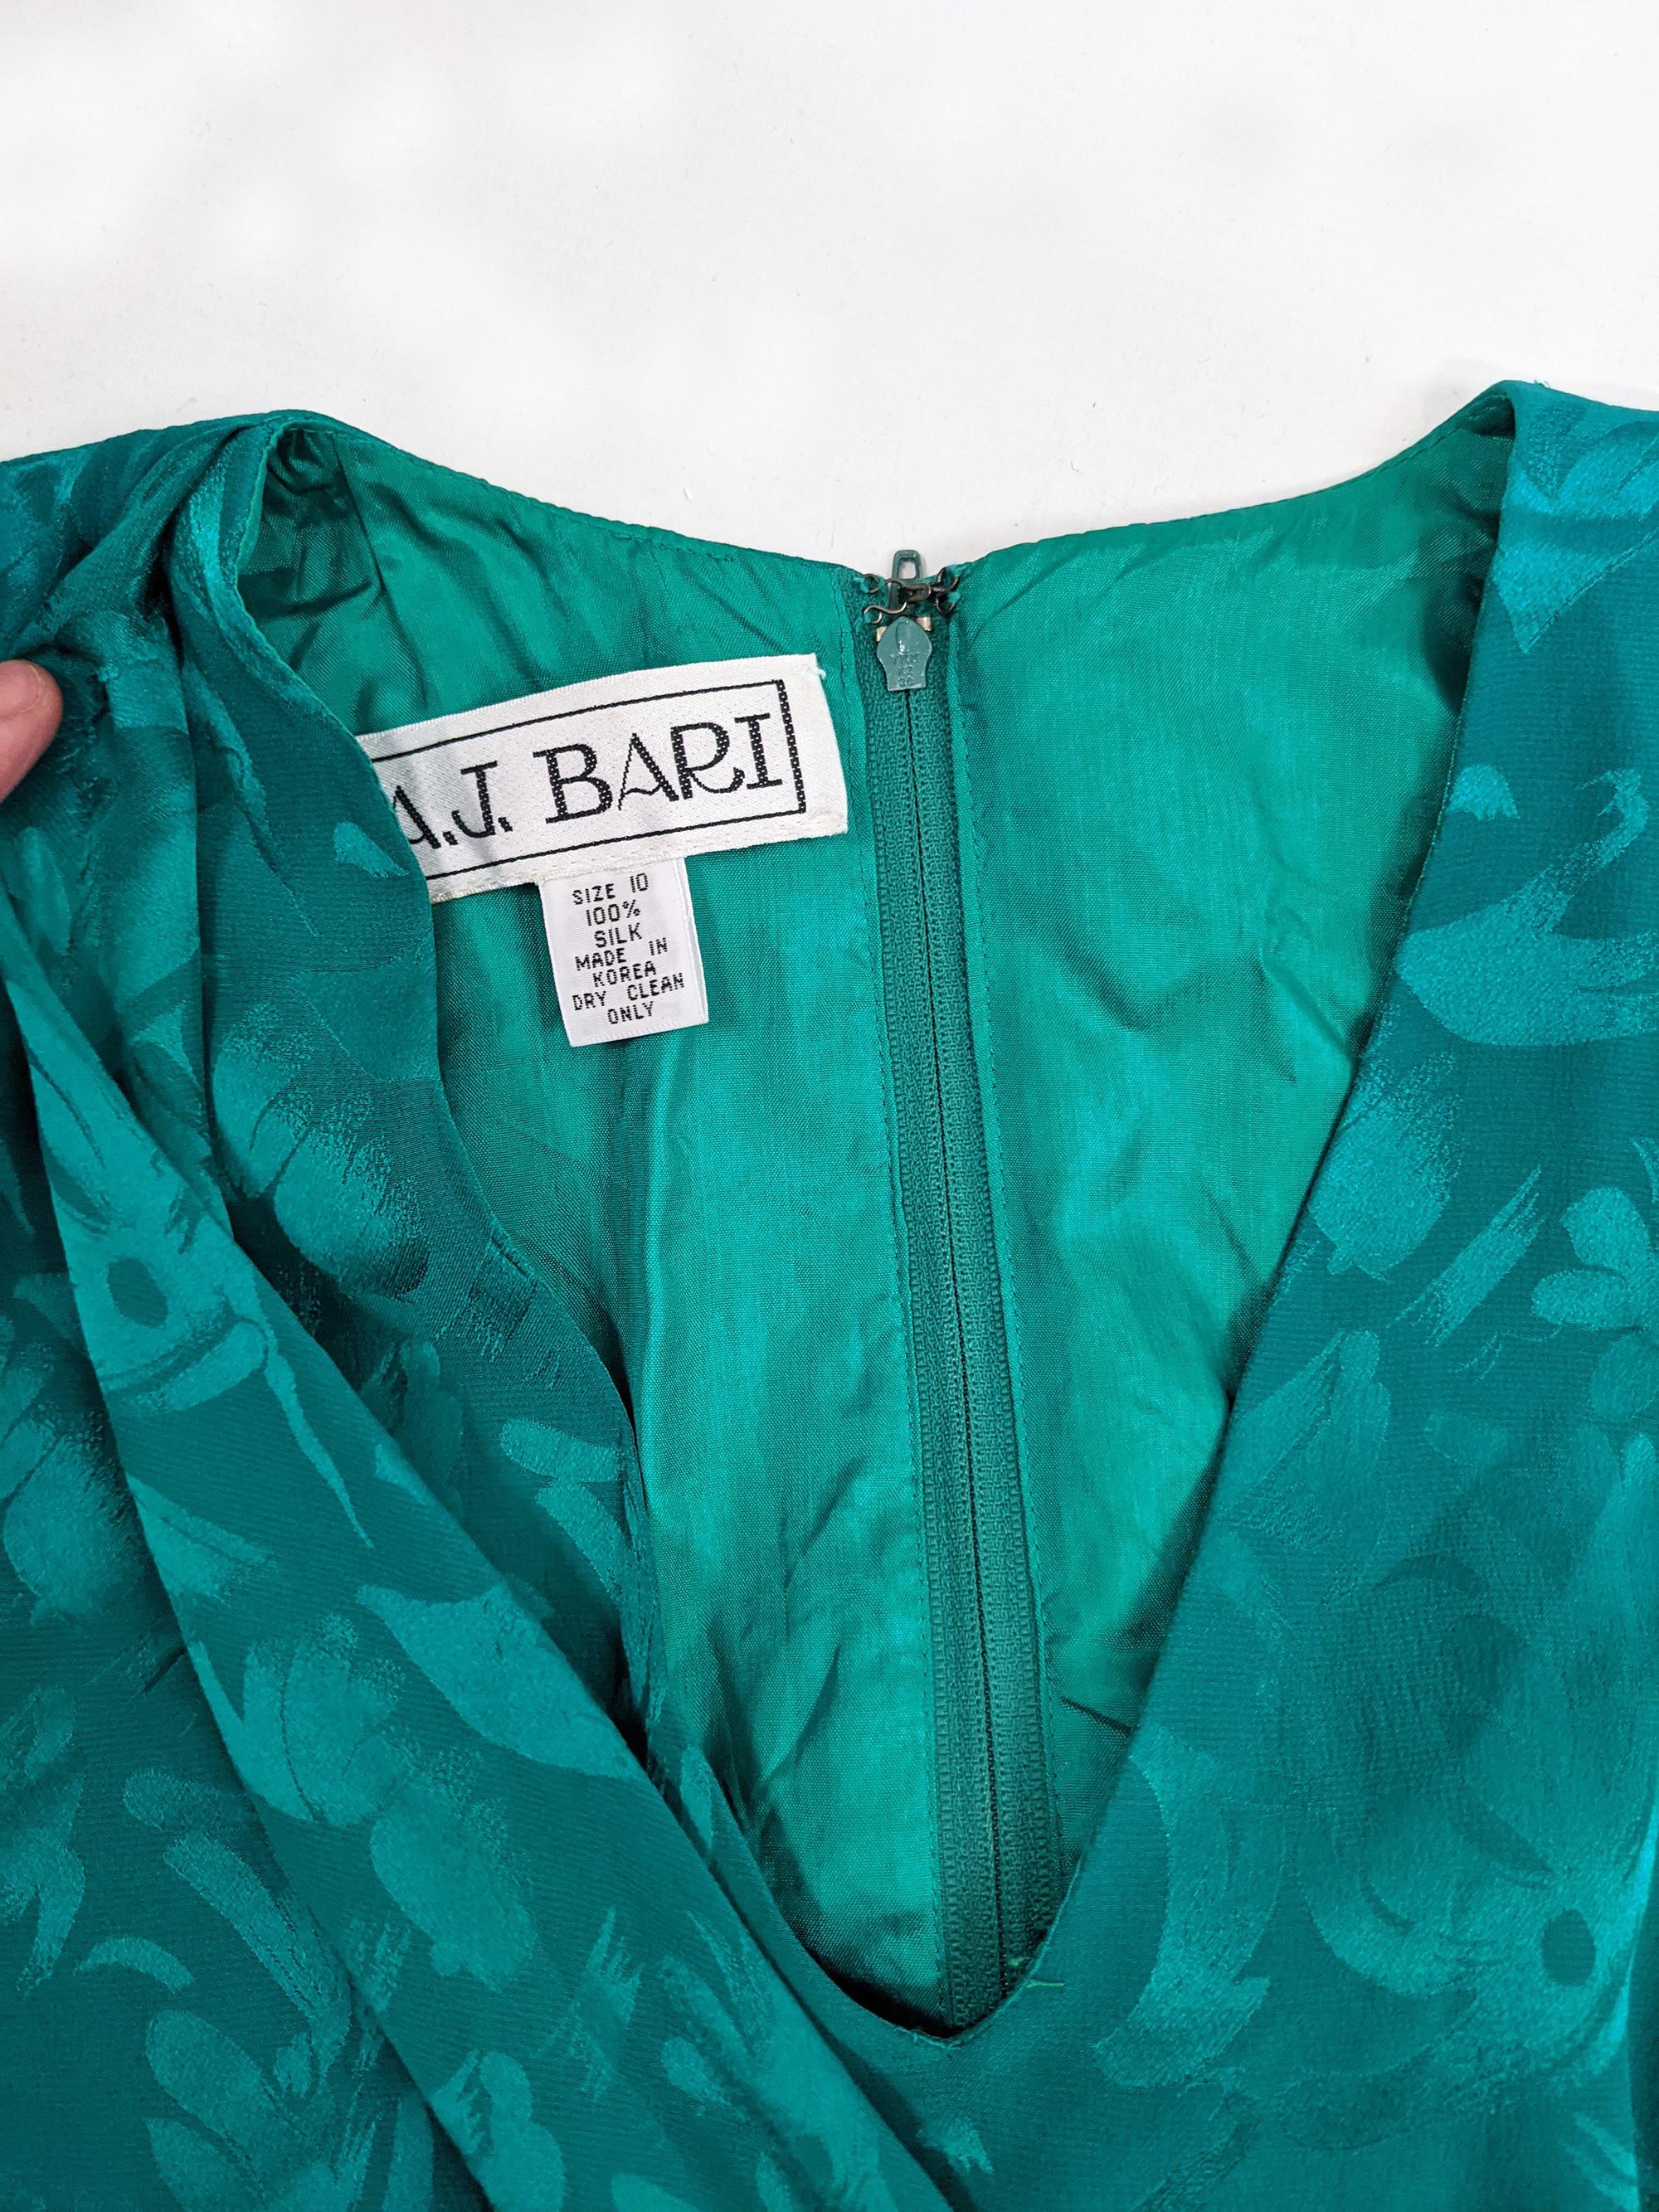 A.J Bari 80s Vintage Emerald Green Silk Satin Jacquard Long Sleeve Dress, 1980s 1